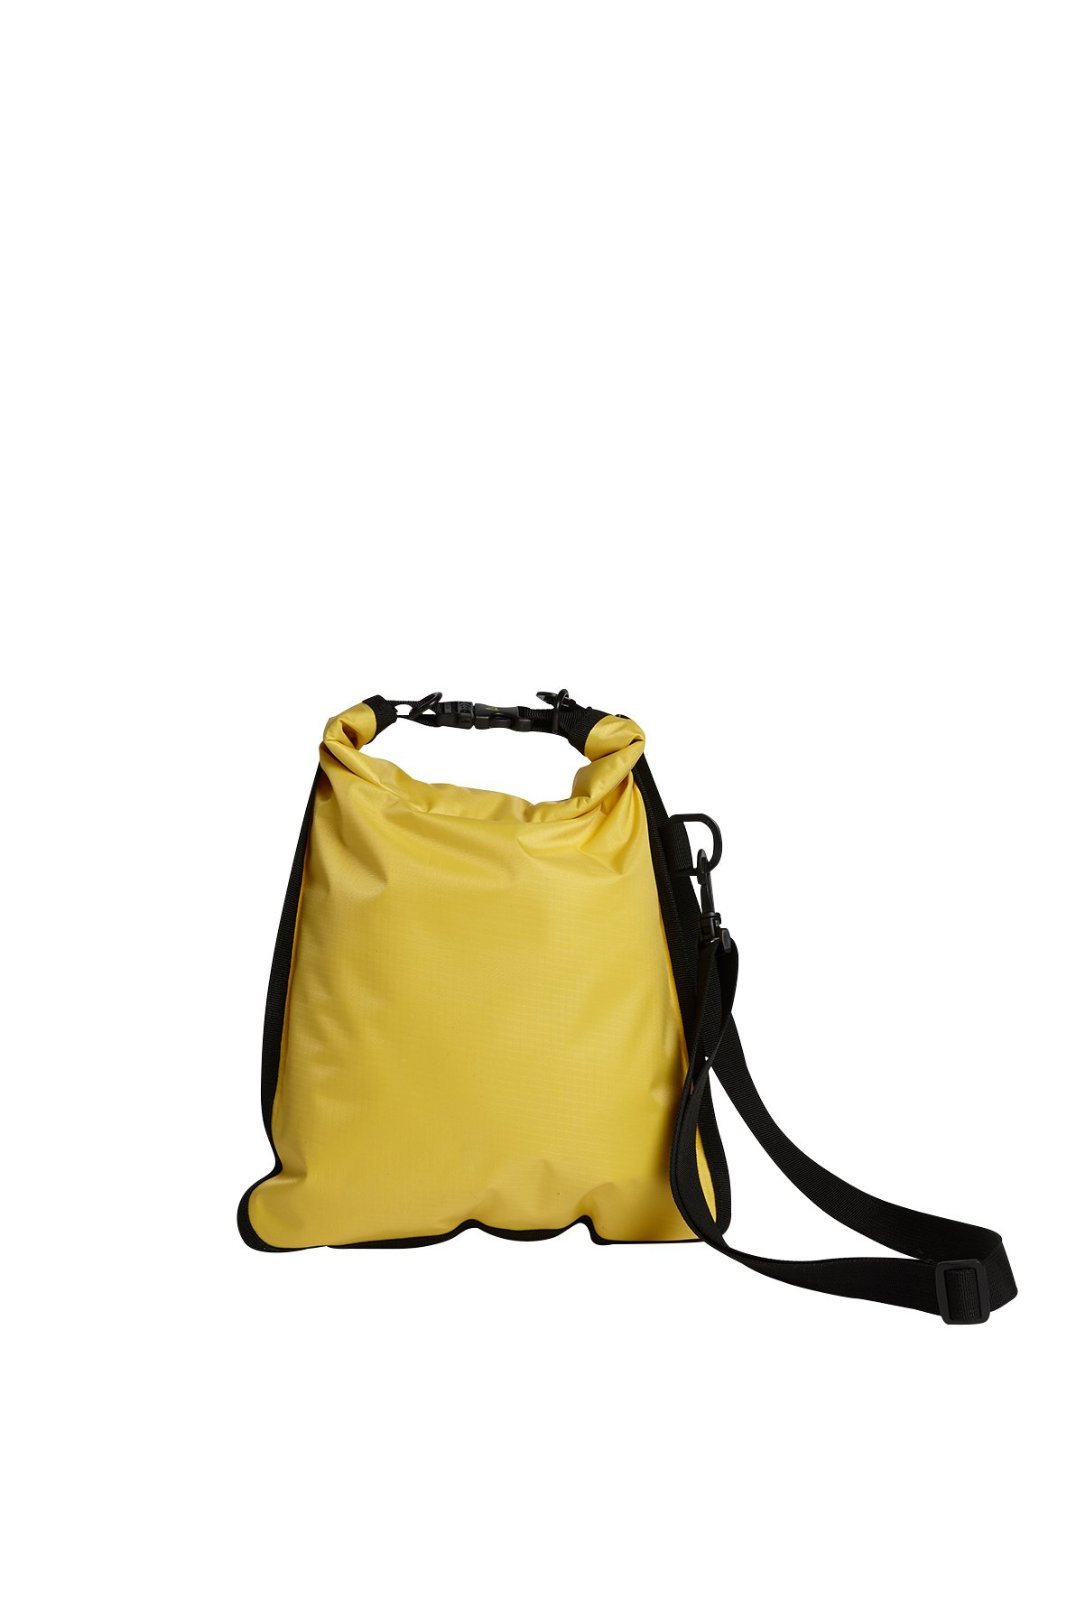 Waterproof Dry Flat Bag - 5L